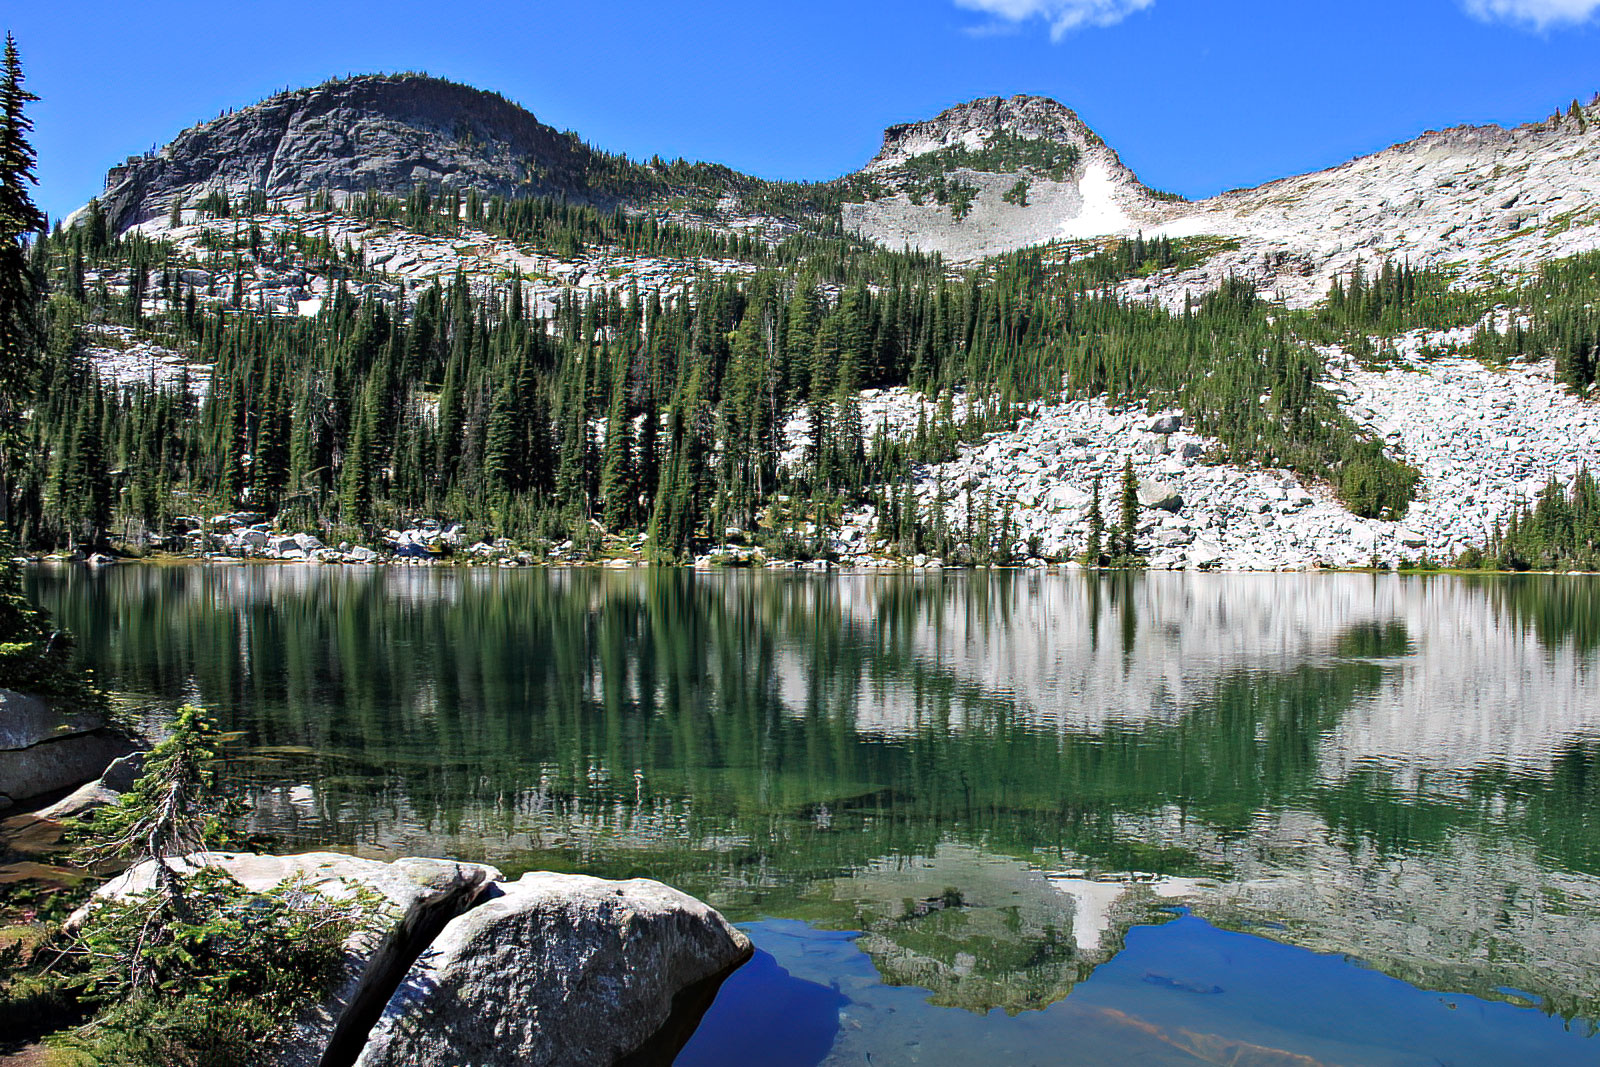 Northern Idaho: The Beehive Lakes Trail